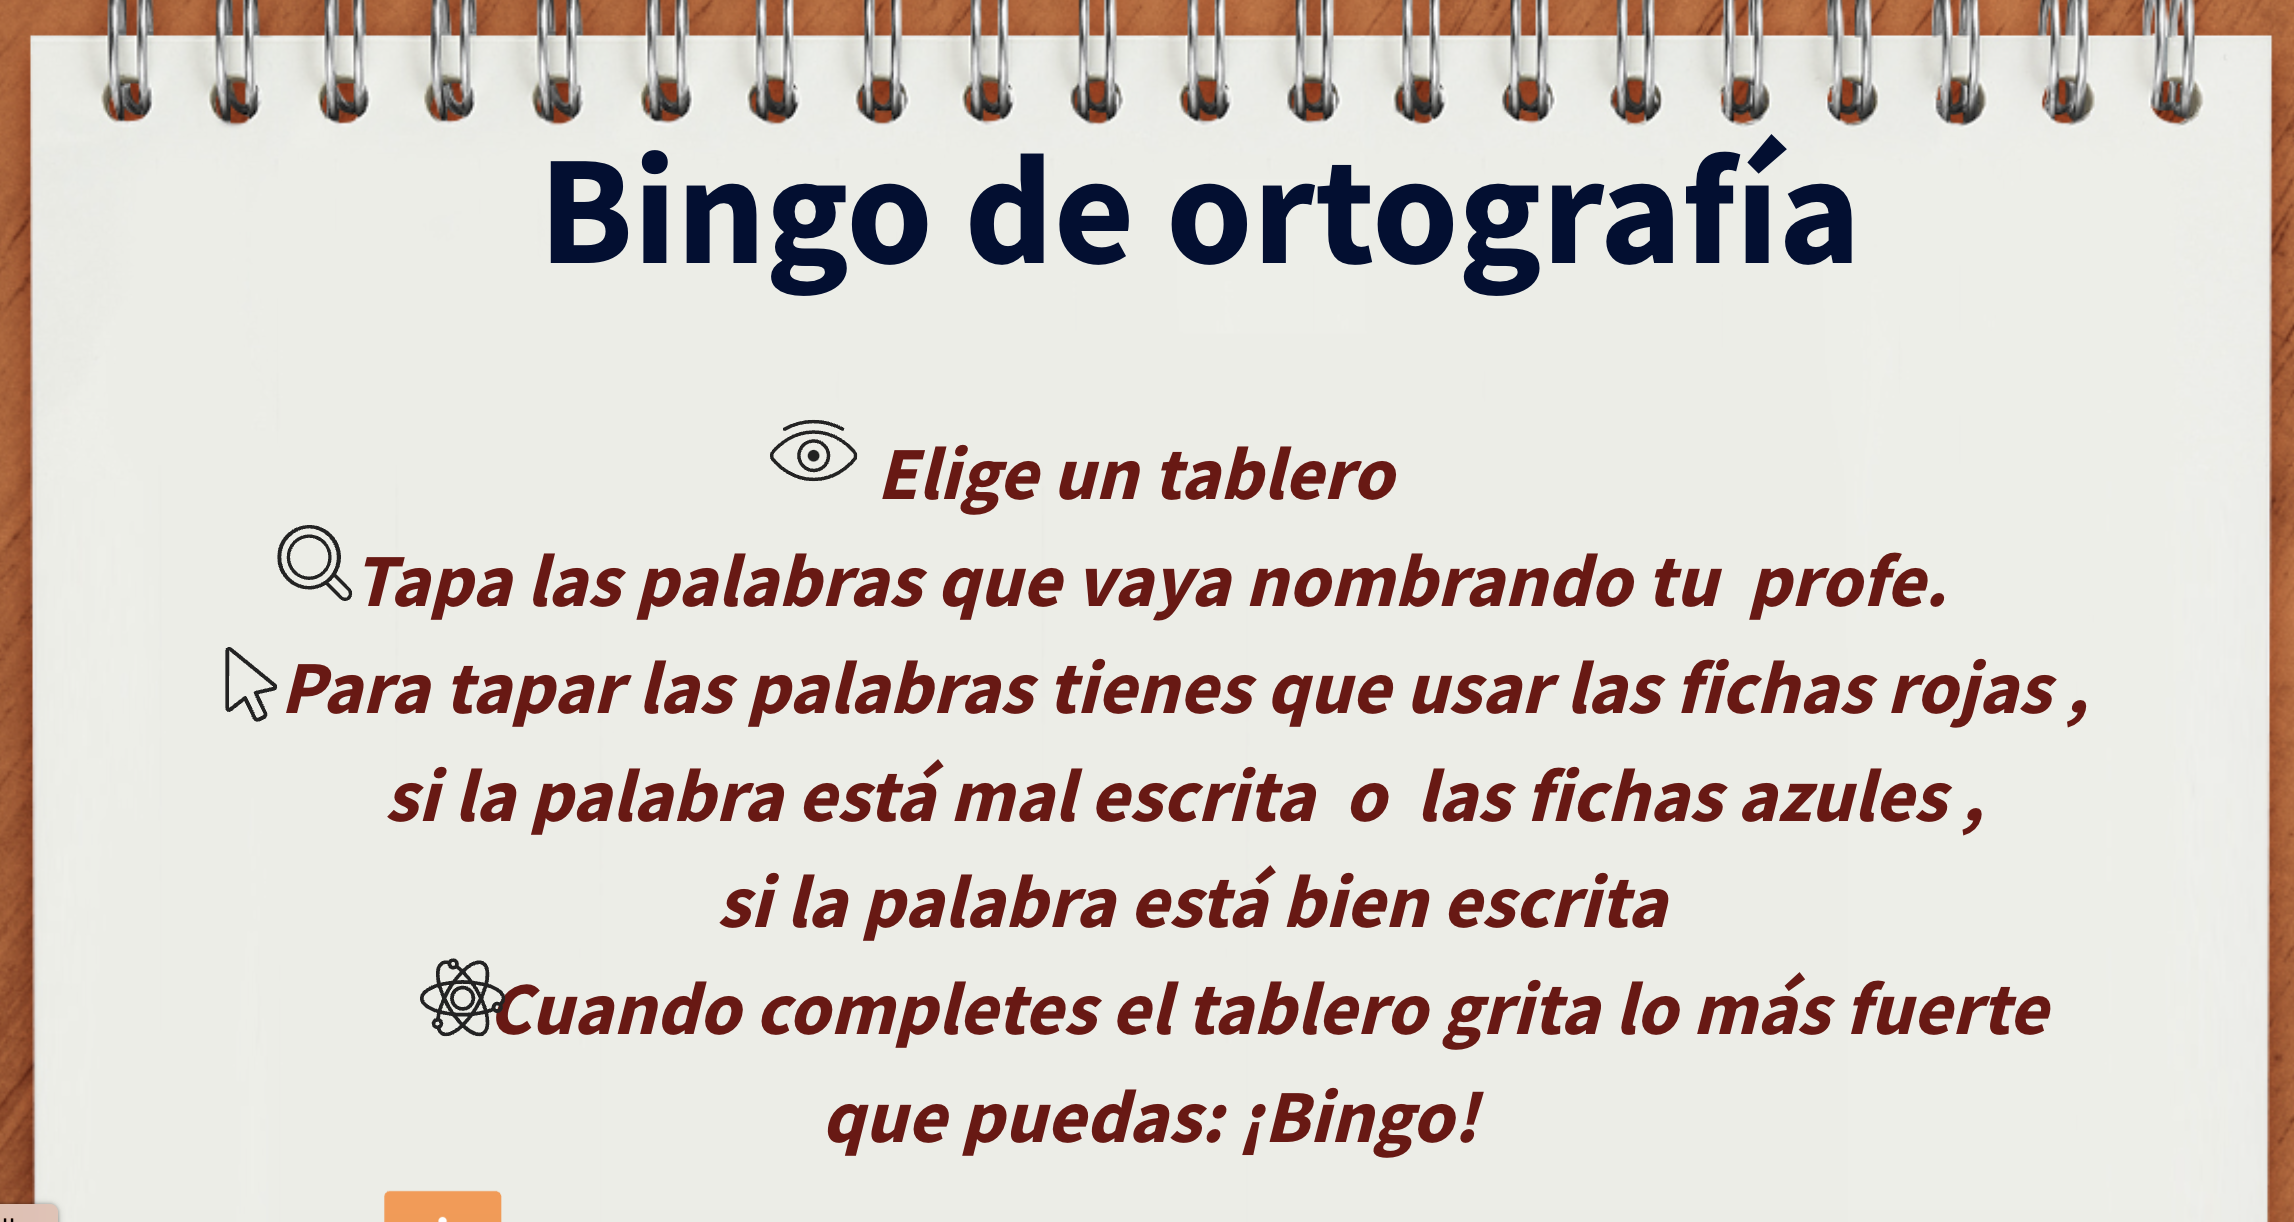 https://view.genial.ly/620c0dfc0c68850018f16e7c/interactive-content-bingo-de-ortografia